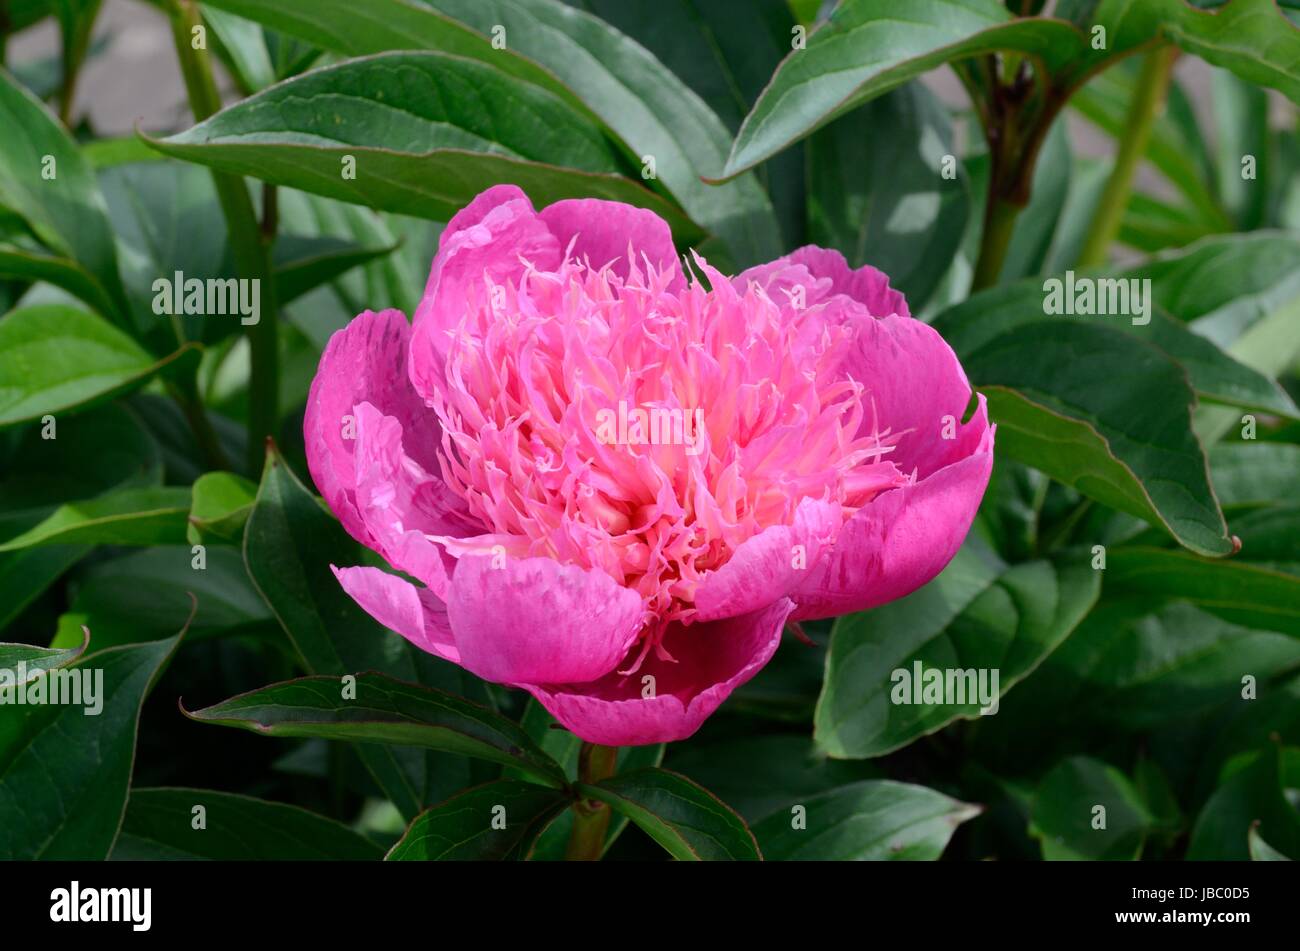 Paeonia lactiflora keways majetic majestic pink scented peony flower Stock Photo